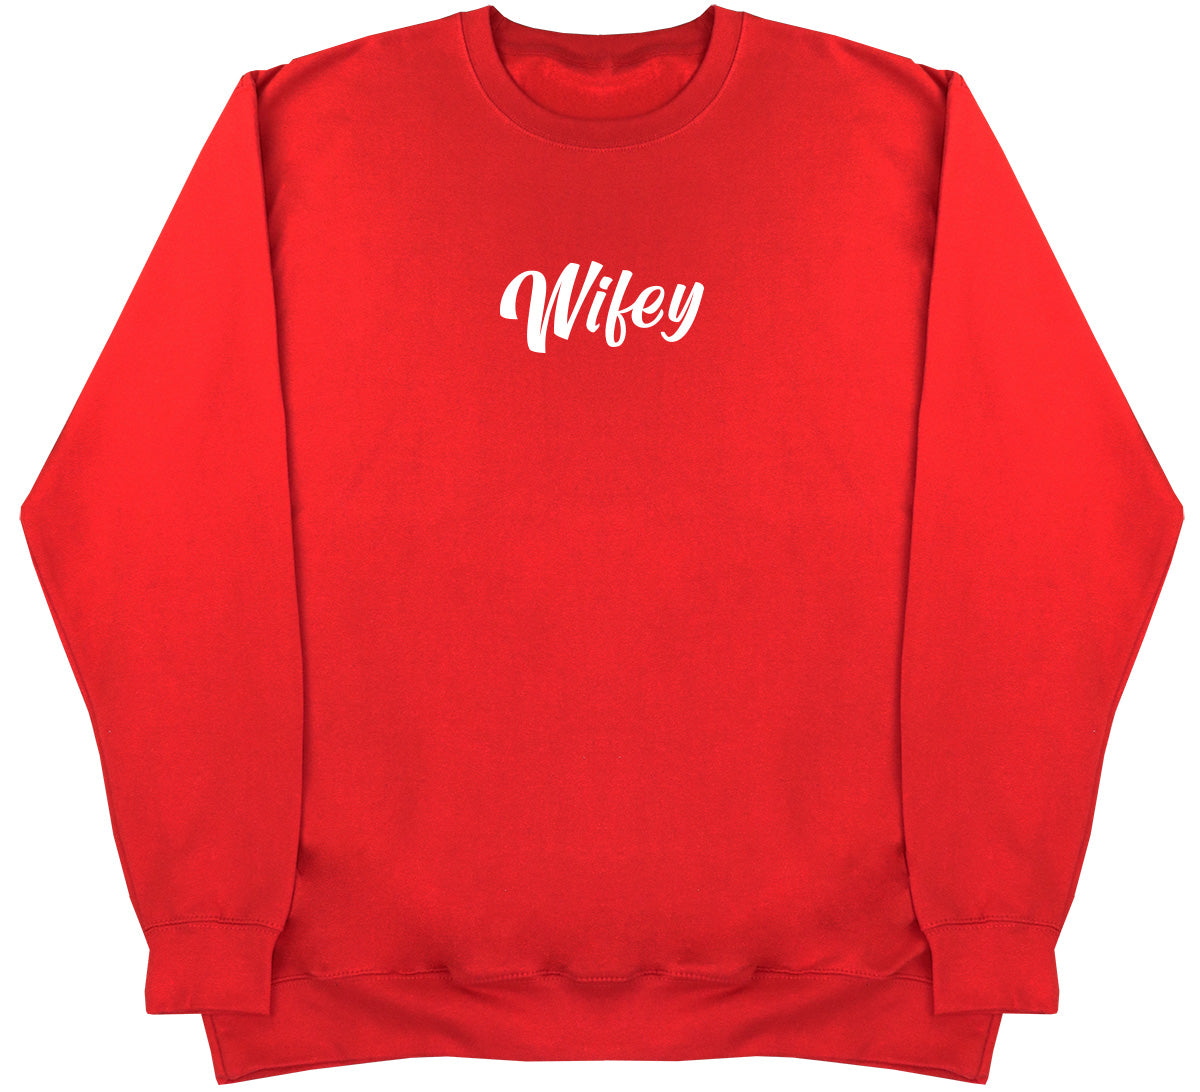 Wifey - Huge Oversized Comfy Original Sweater